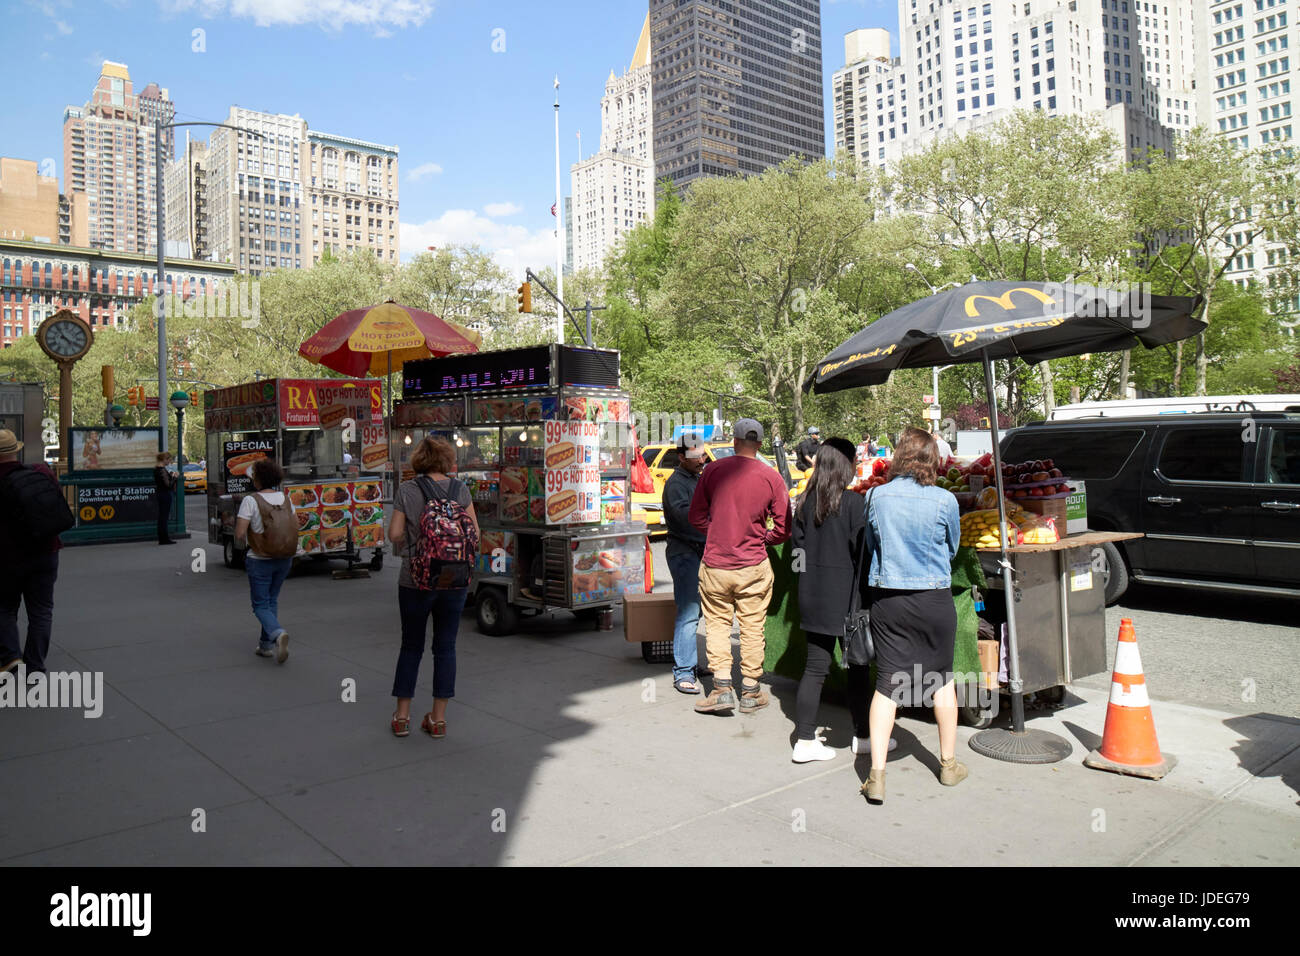 food carts at madison square park New York City USA Stock Photo